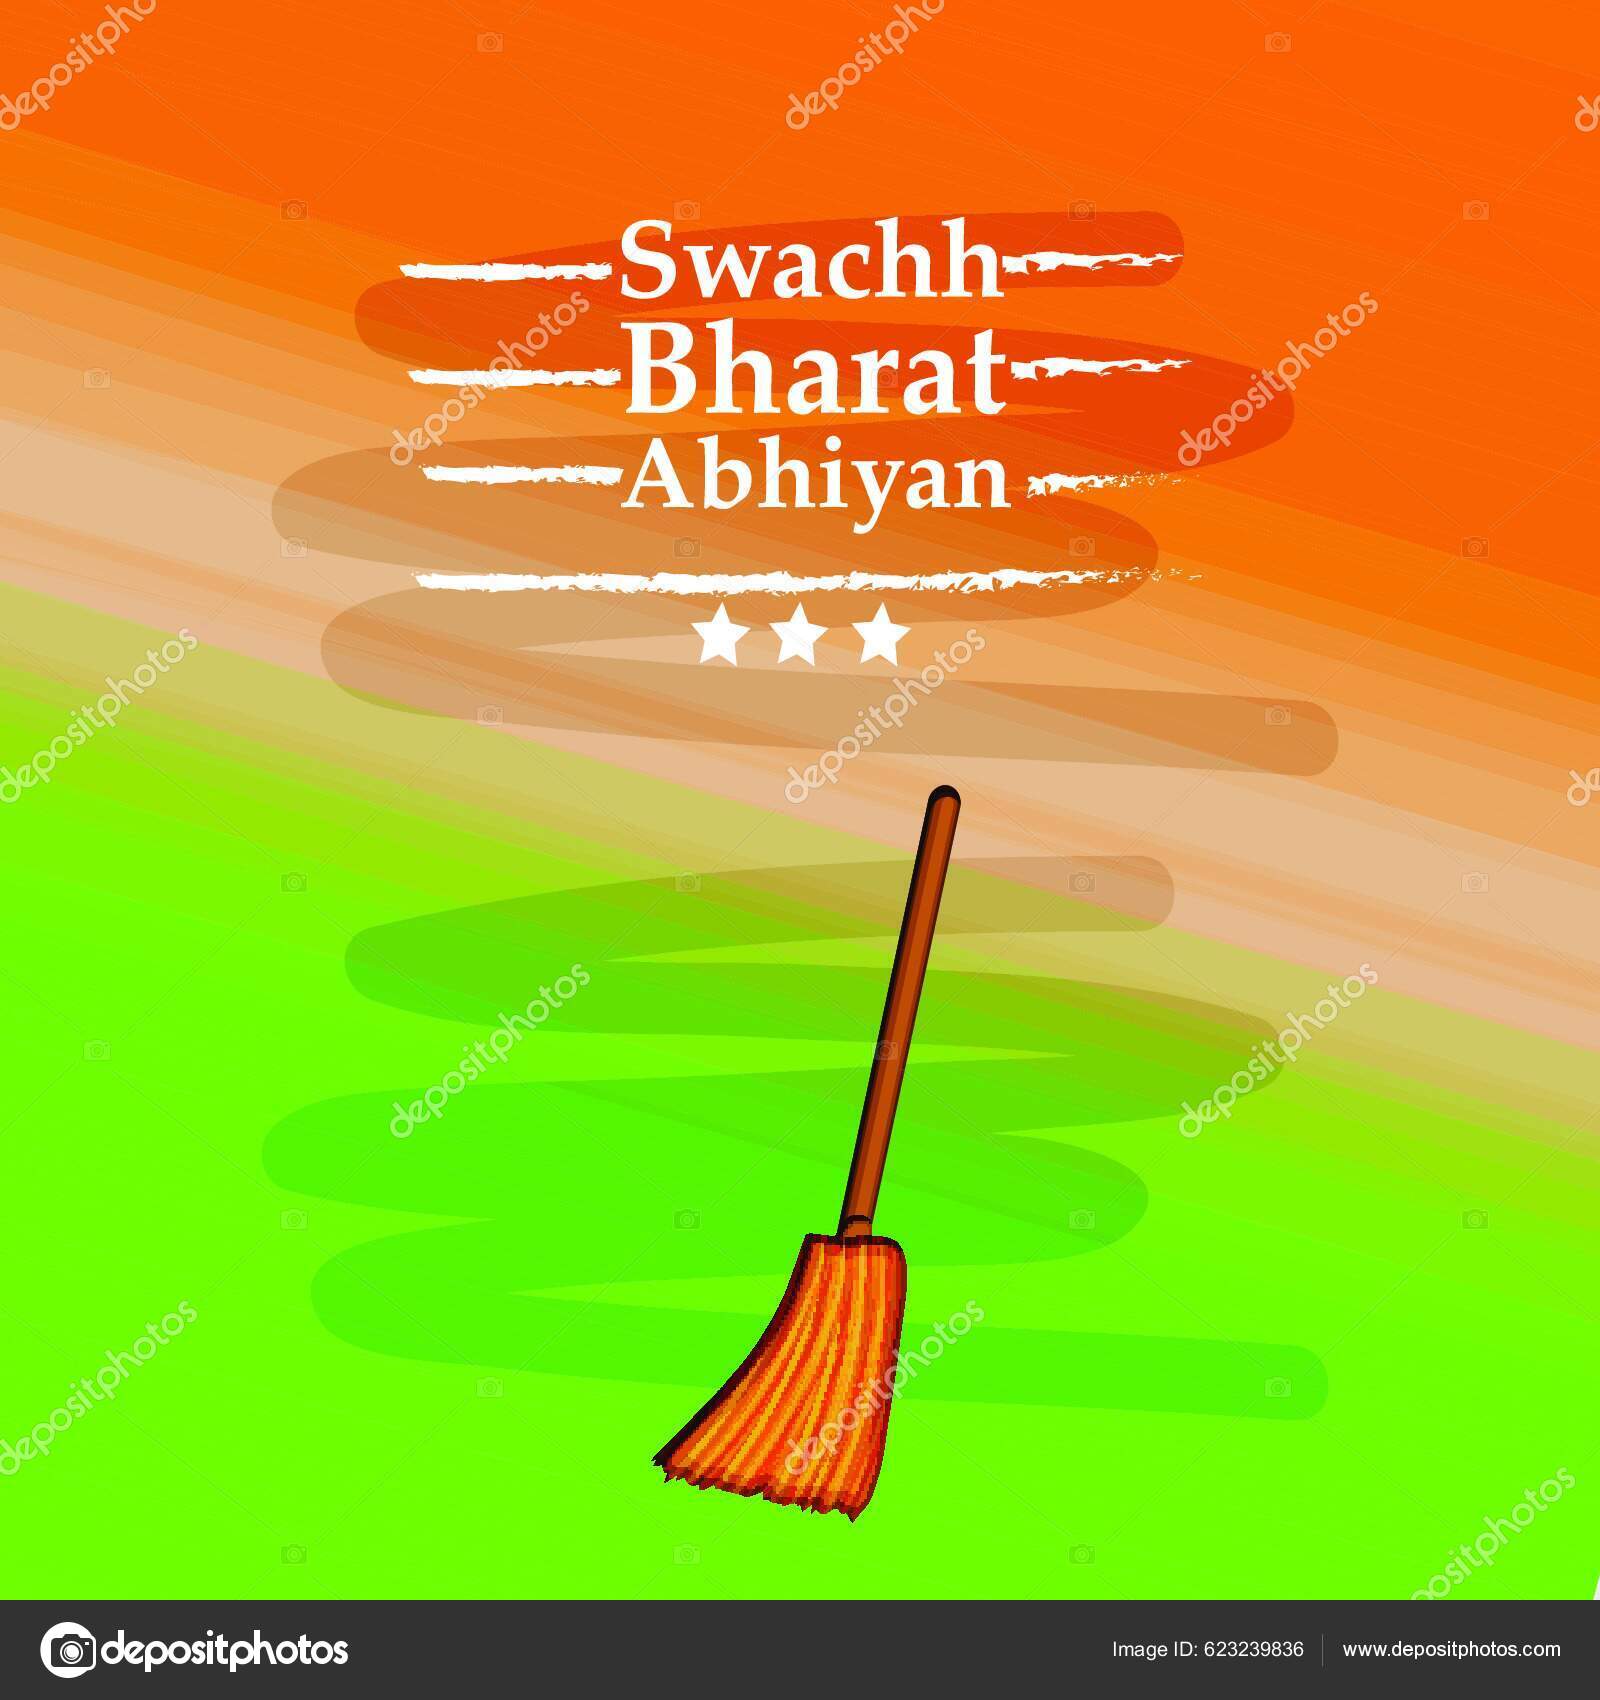 Swachh bharat Vector Art Stock Images | Depositphotos